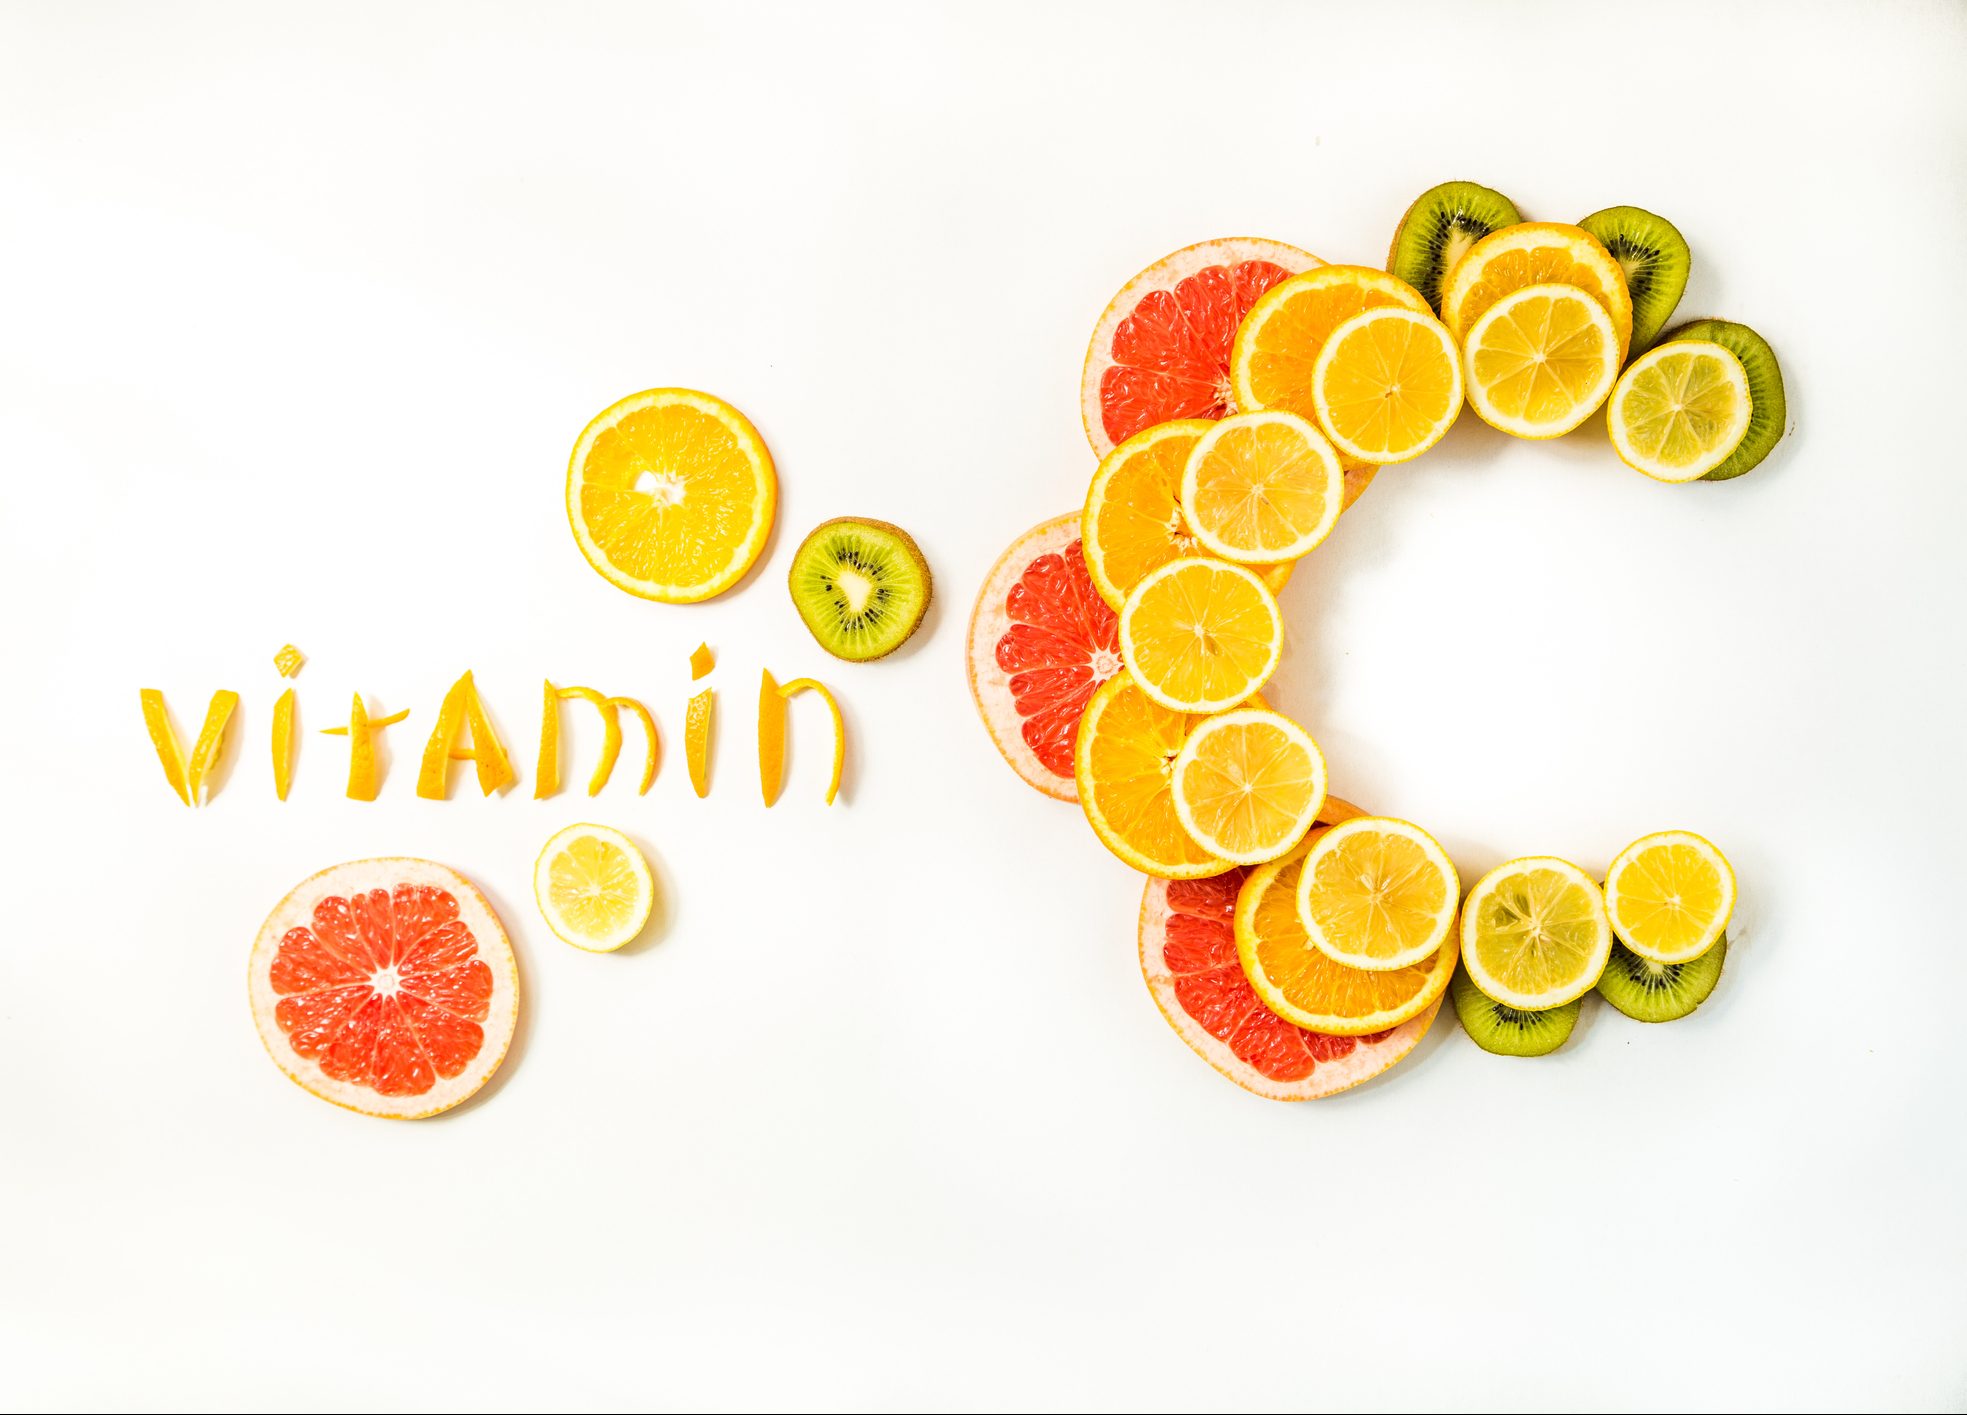 FUNIBER-vitamin-c-letters-made-of-citrus-fruits